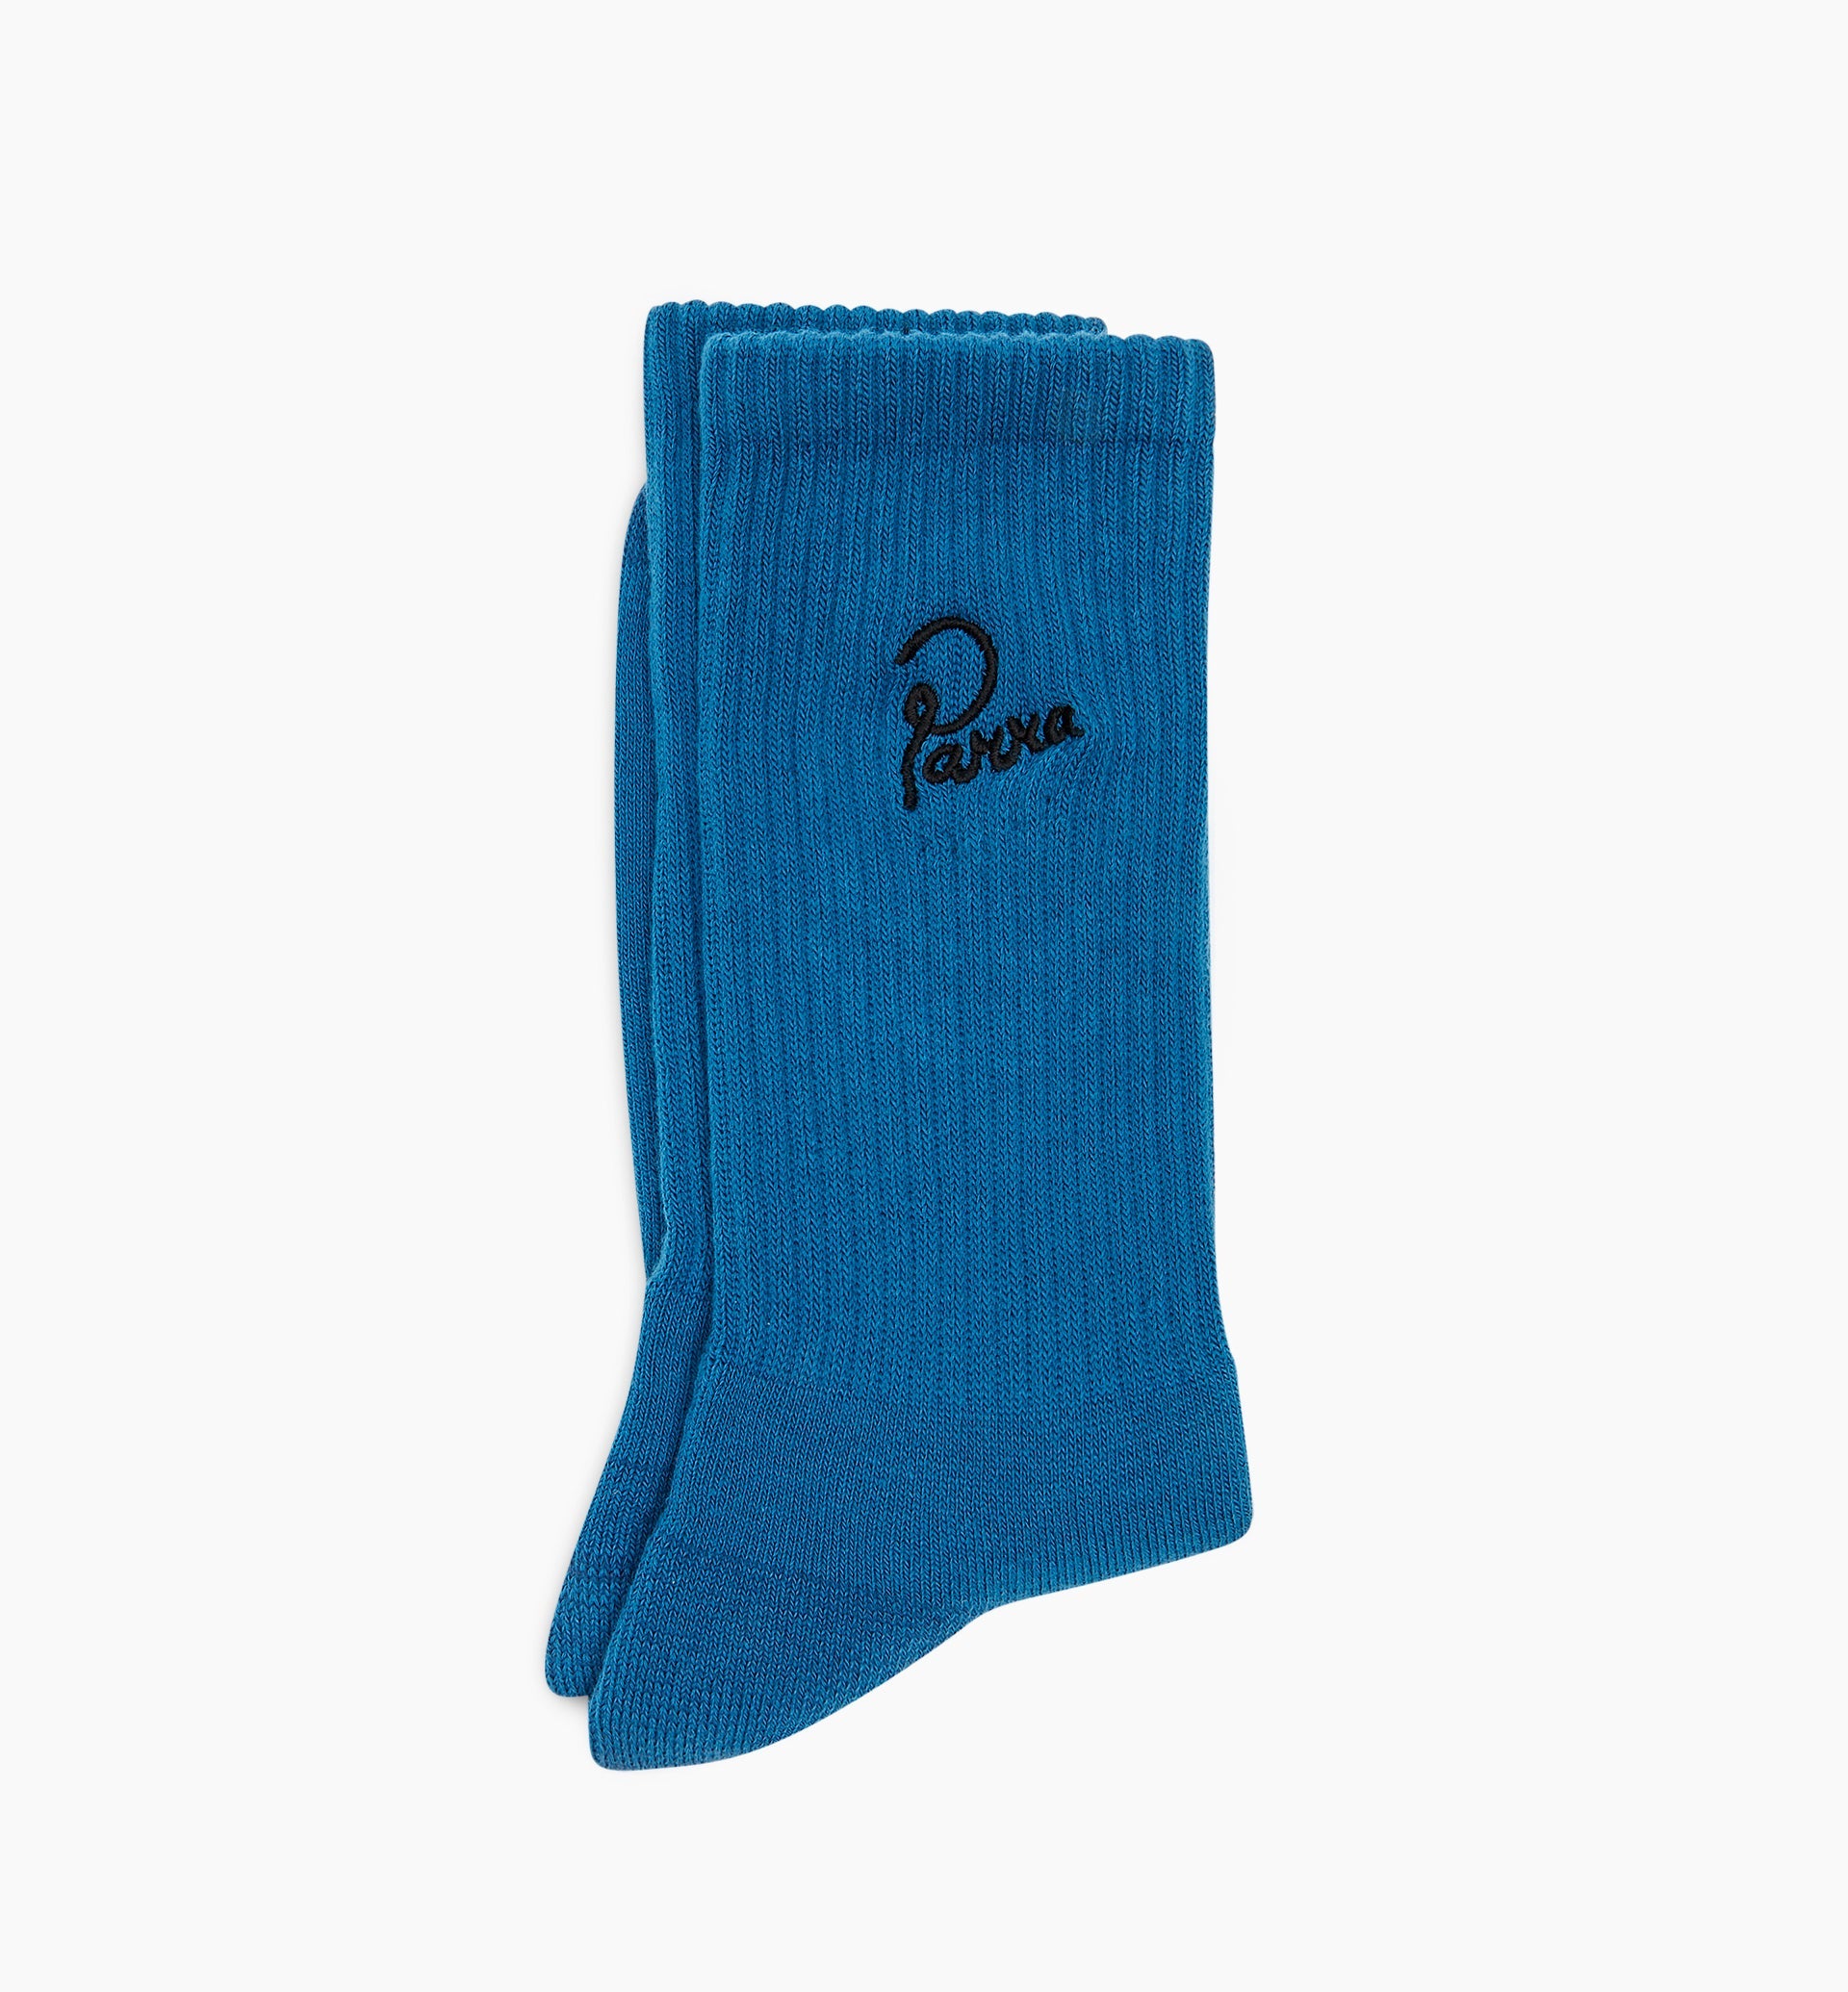 Parra - crew socks